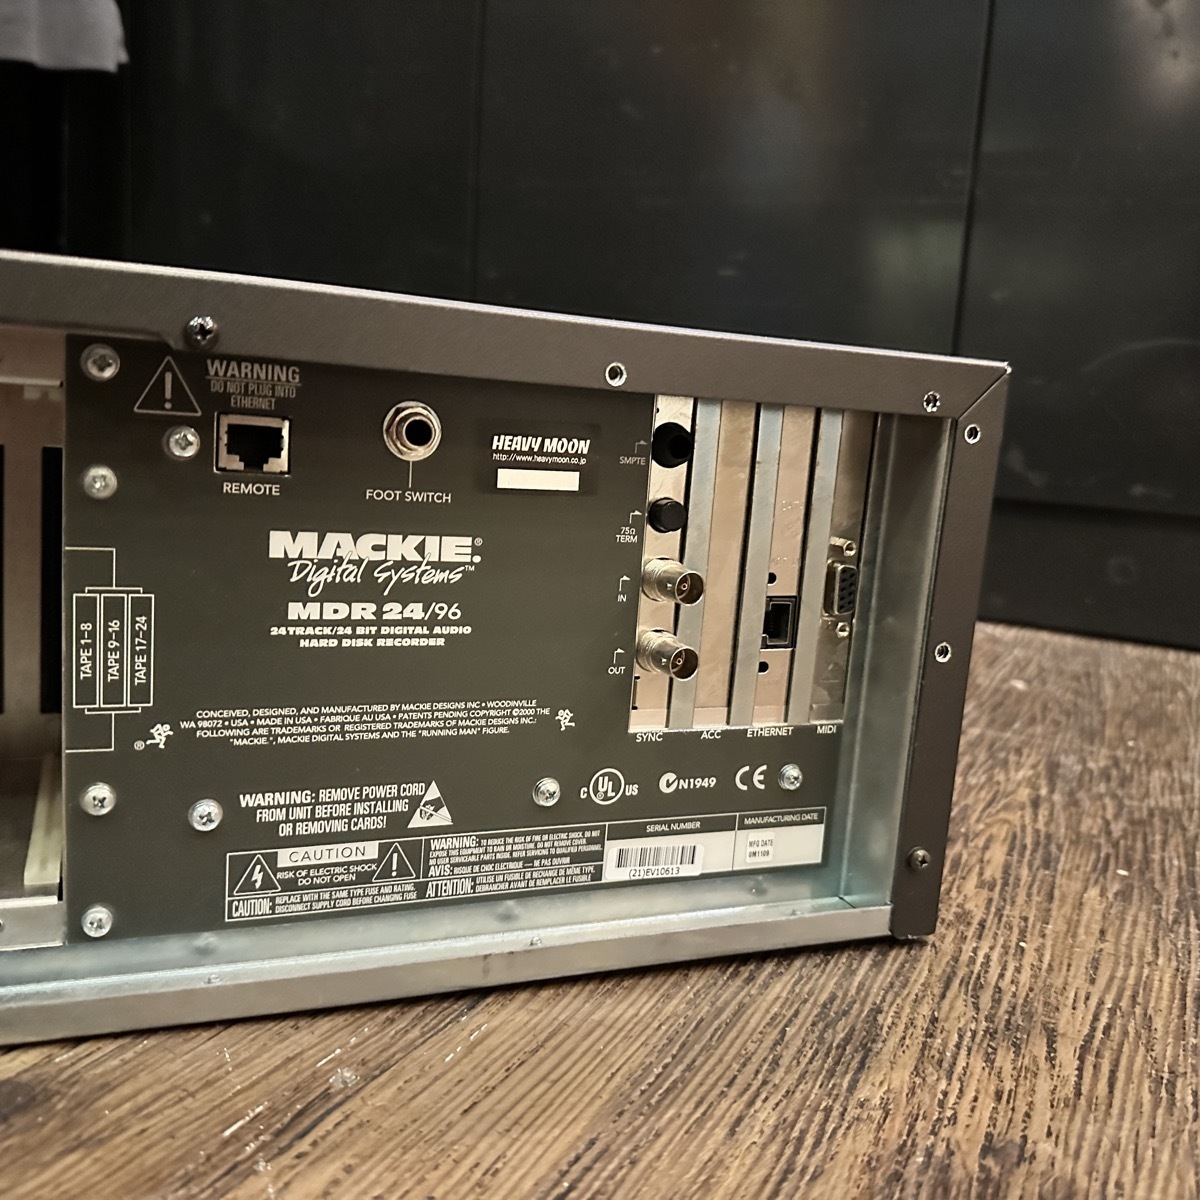 Mackie MDR 24/96 Digital Hard Disk Recorder Mackie текущее состояние товар -GrunSound-z156-